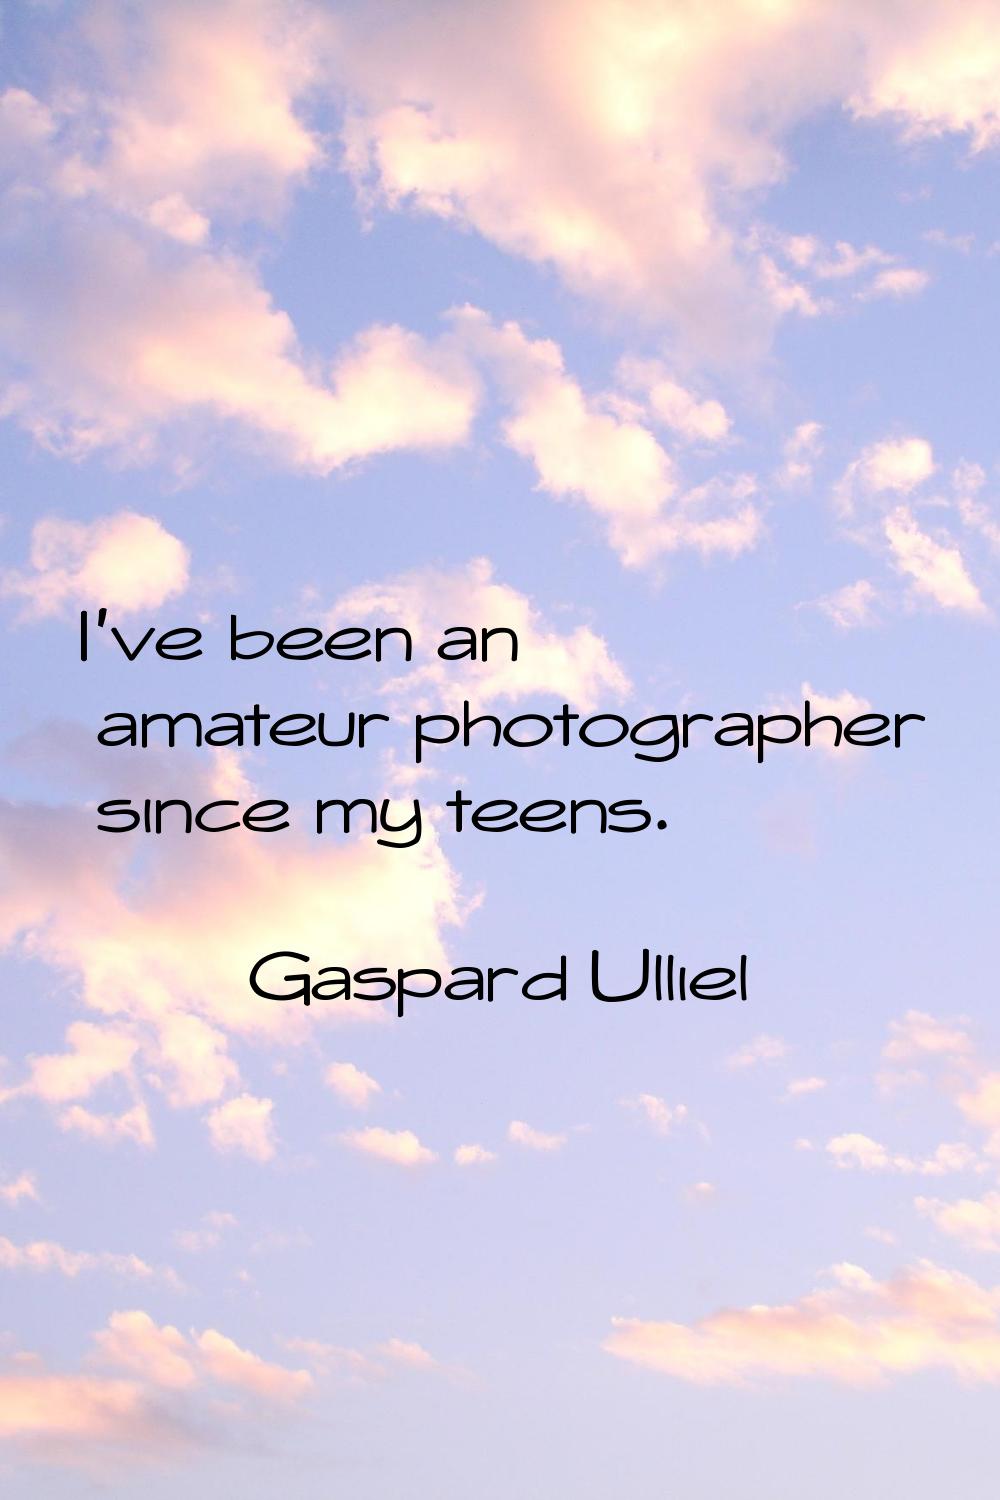 I've been an amateur photographer since my teens.